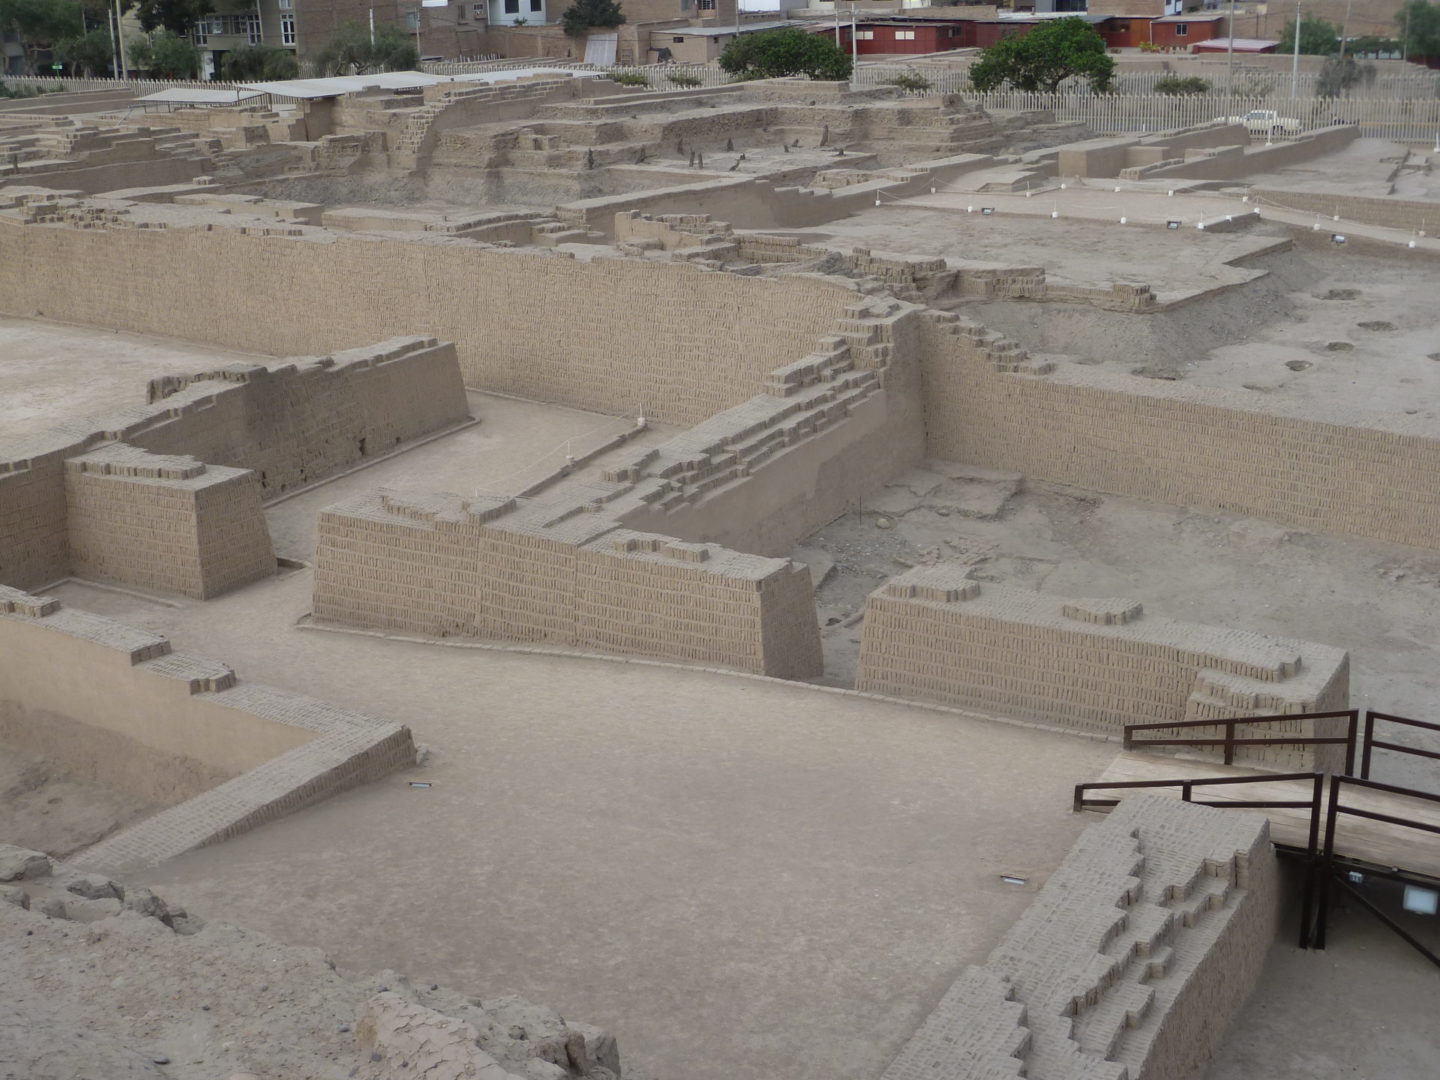 Archäologische Stätte "Huaca Pucclana"